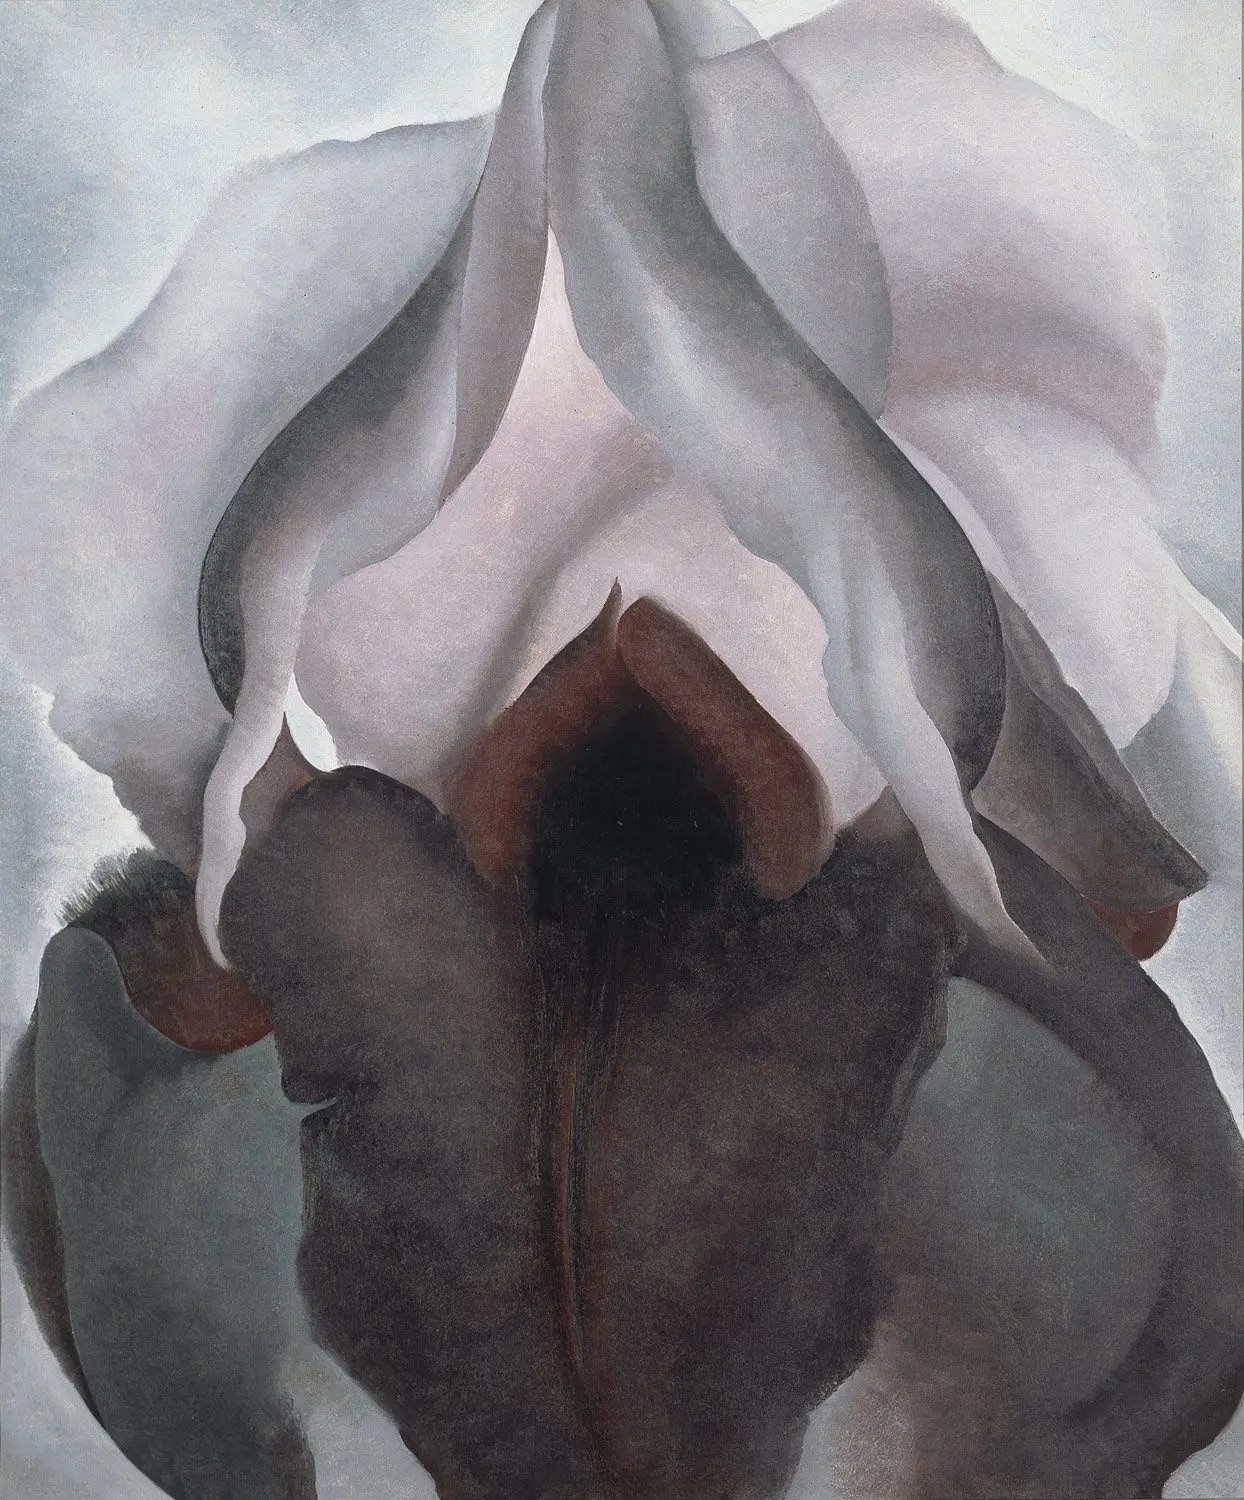 Georgia O'Keeffe. Black Iris. 1926. Source: metmuseum